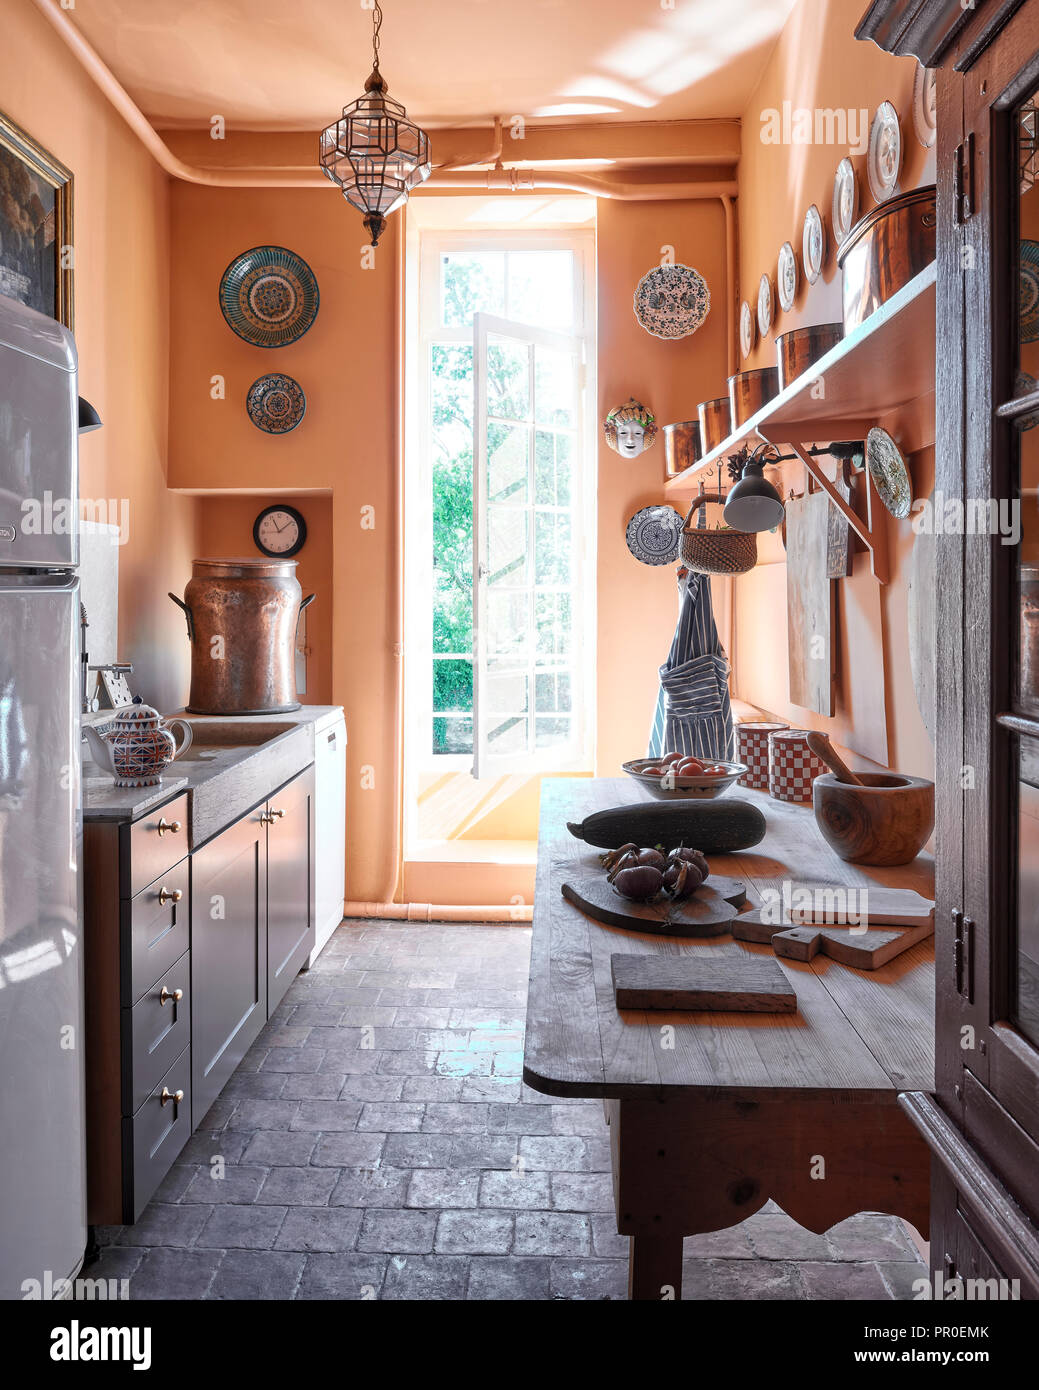 Simple rustic farmhouse kitchen Stock Photo